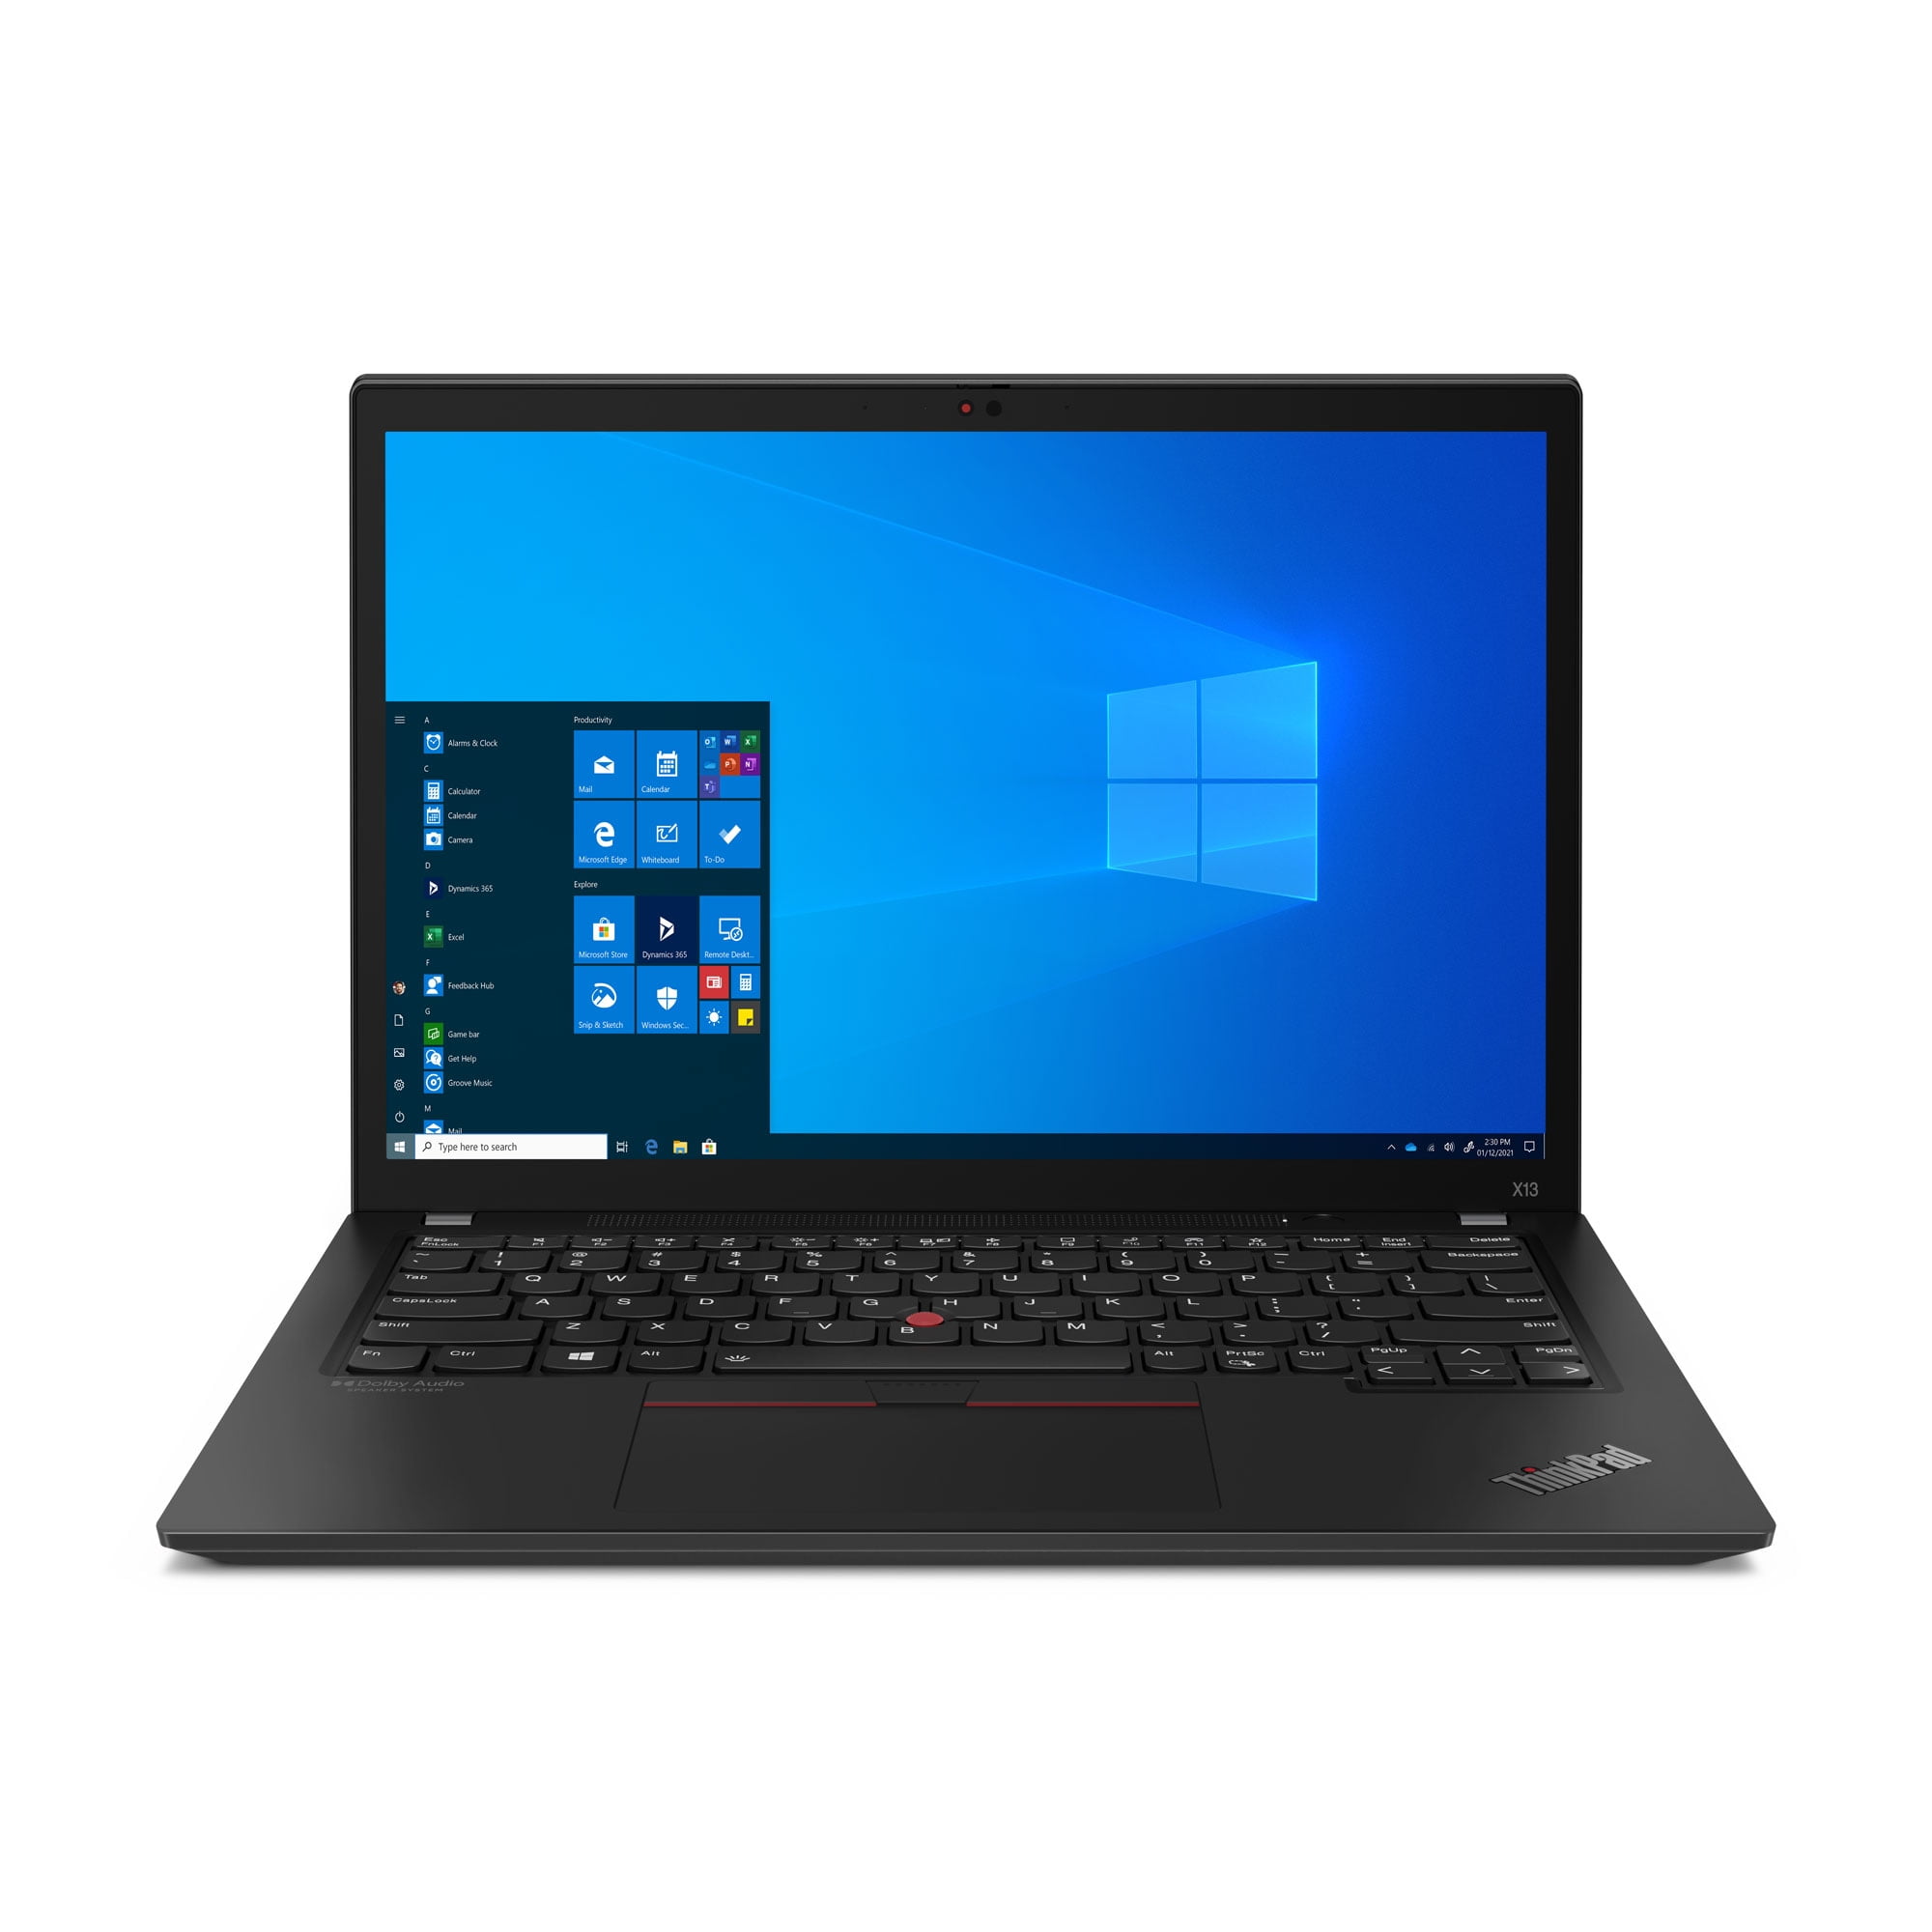 Lenovo ThinkPad X13 Gen 2 Intel Laptop, 13.3" IPS LED Backlight, i5